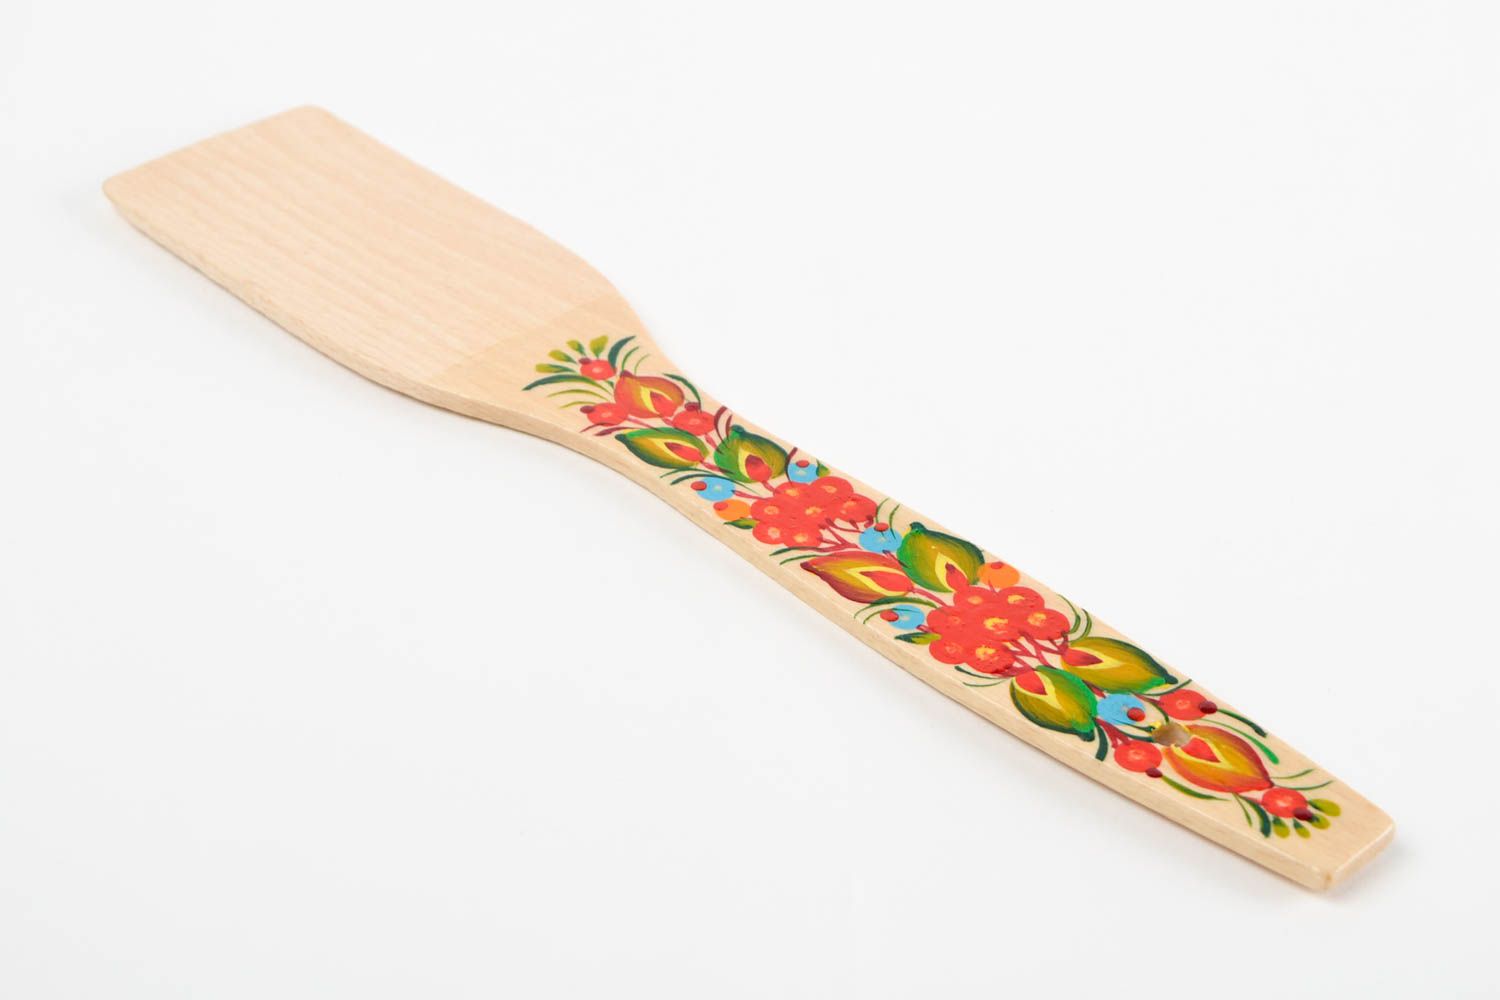 Handmade wooden spatula cooking tools kitchen utensils wood craft ideas photo 4